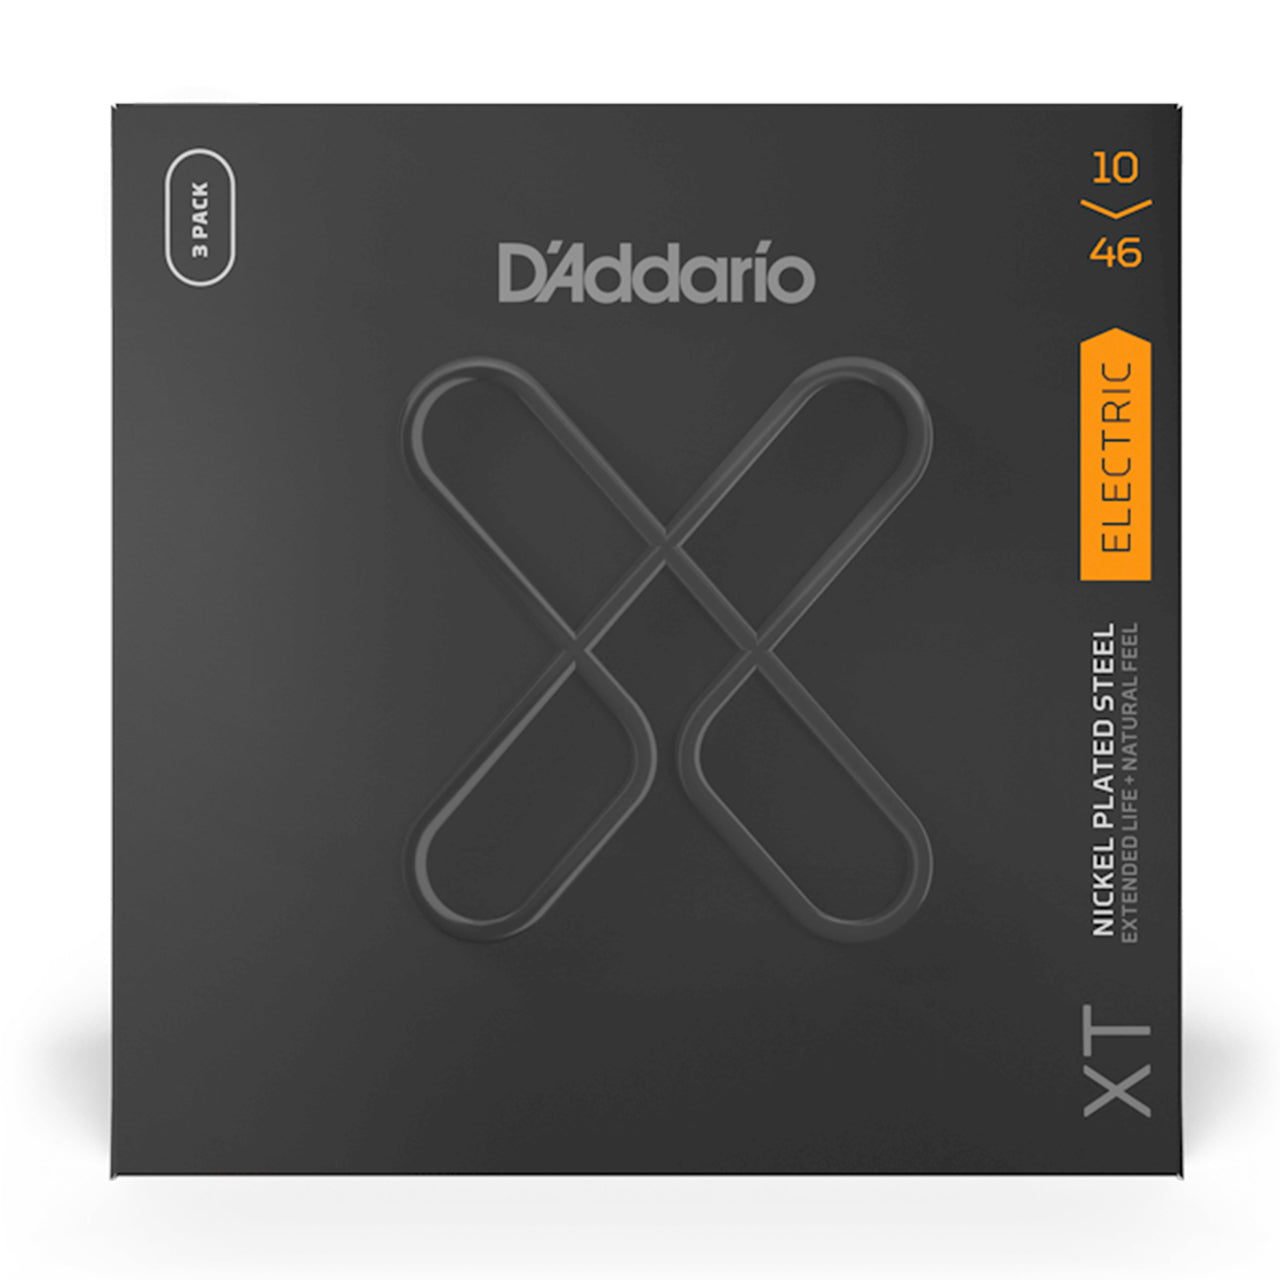 D'Addario XT Nickel Coated 3-Pack Electric Guitar Strings, 10-46 Regular Light